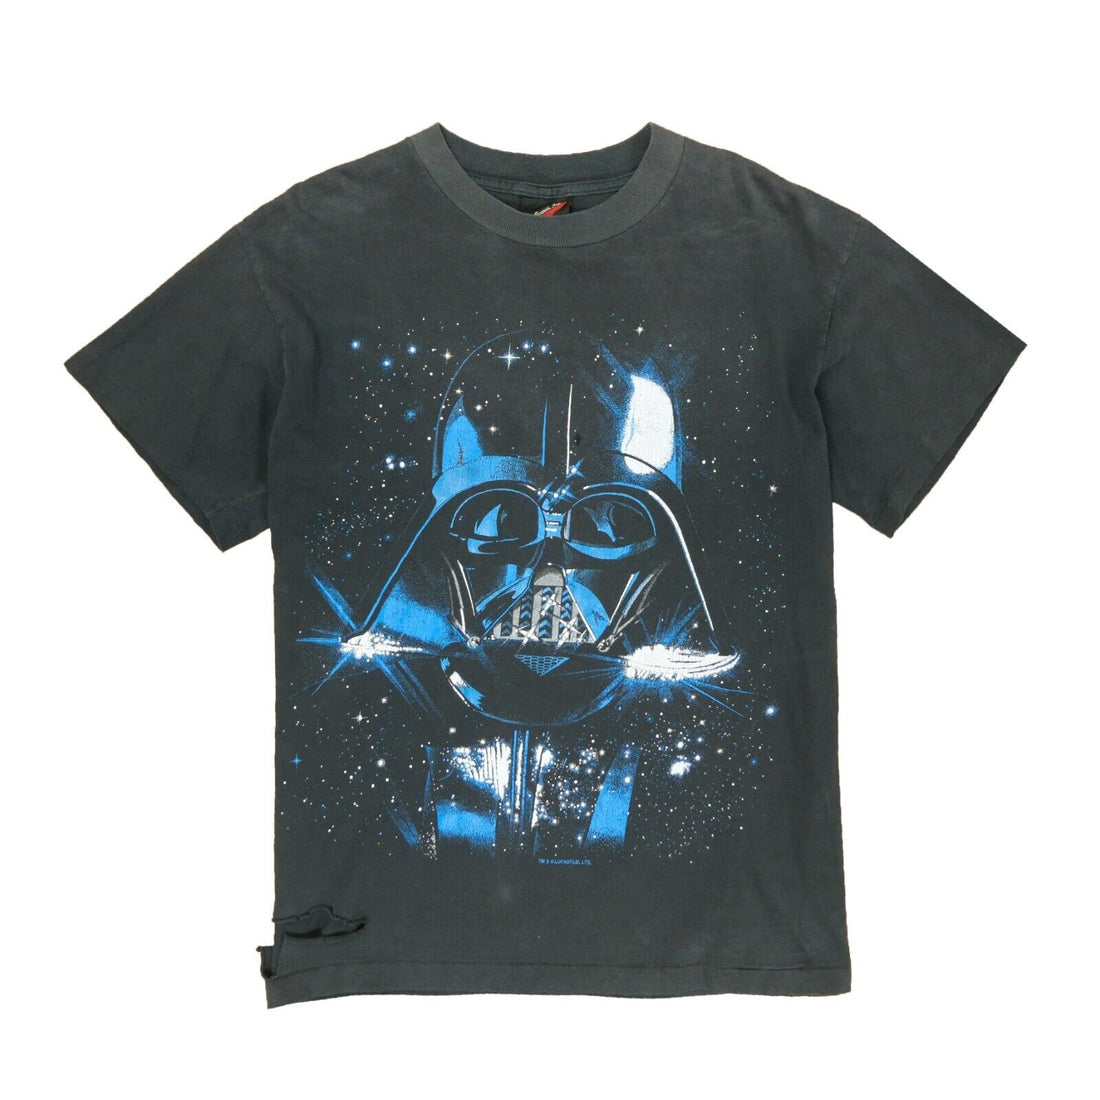 Vintage Star Wars Darth Vader T-Shirt Size Large Black Galaxy Movie Promo 90s